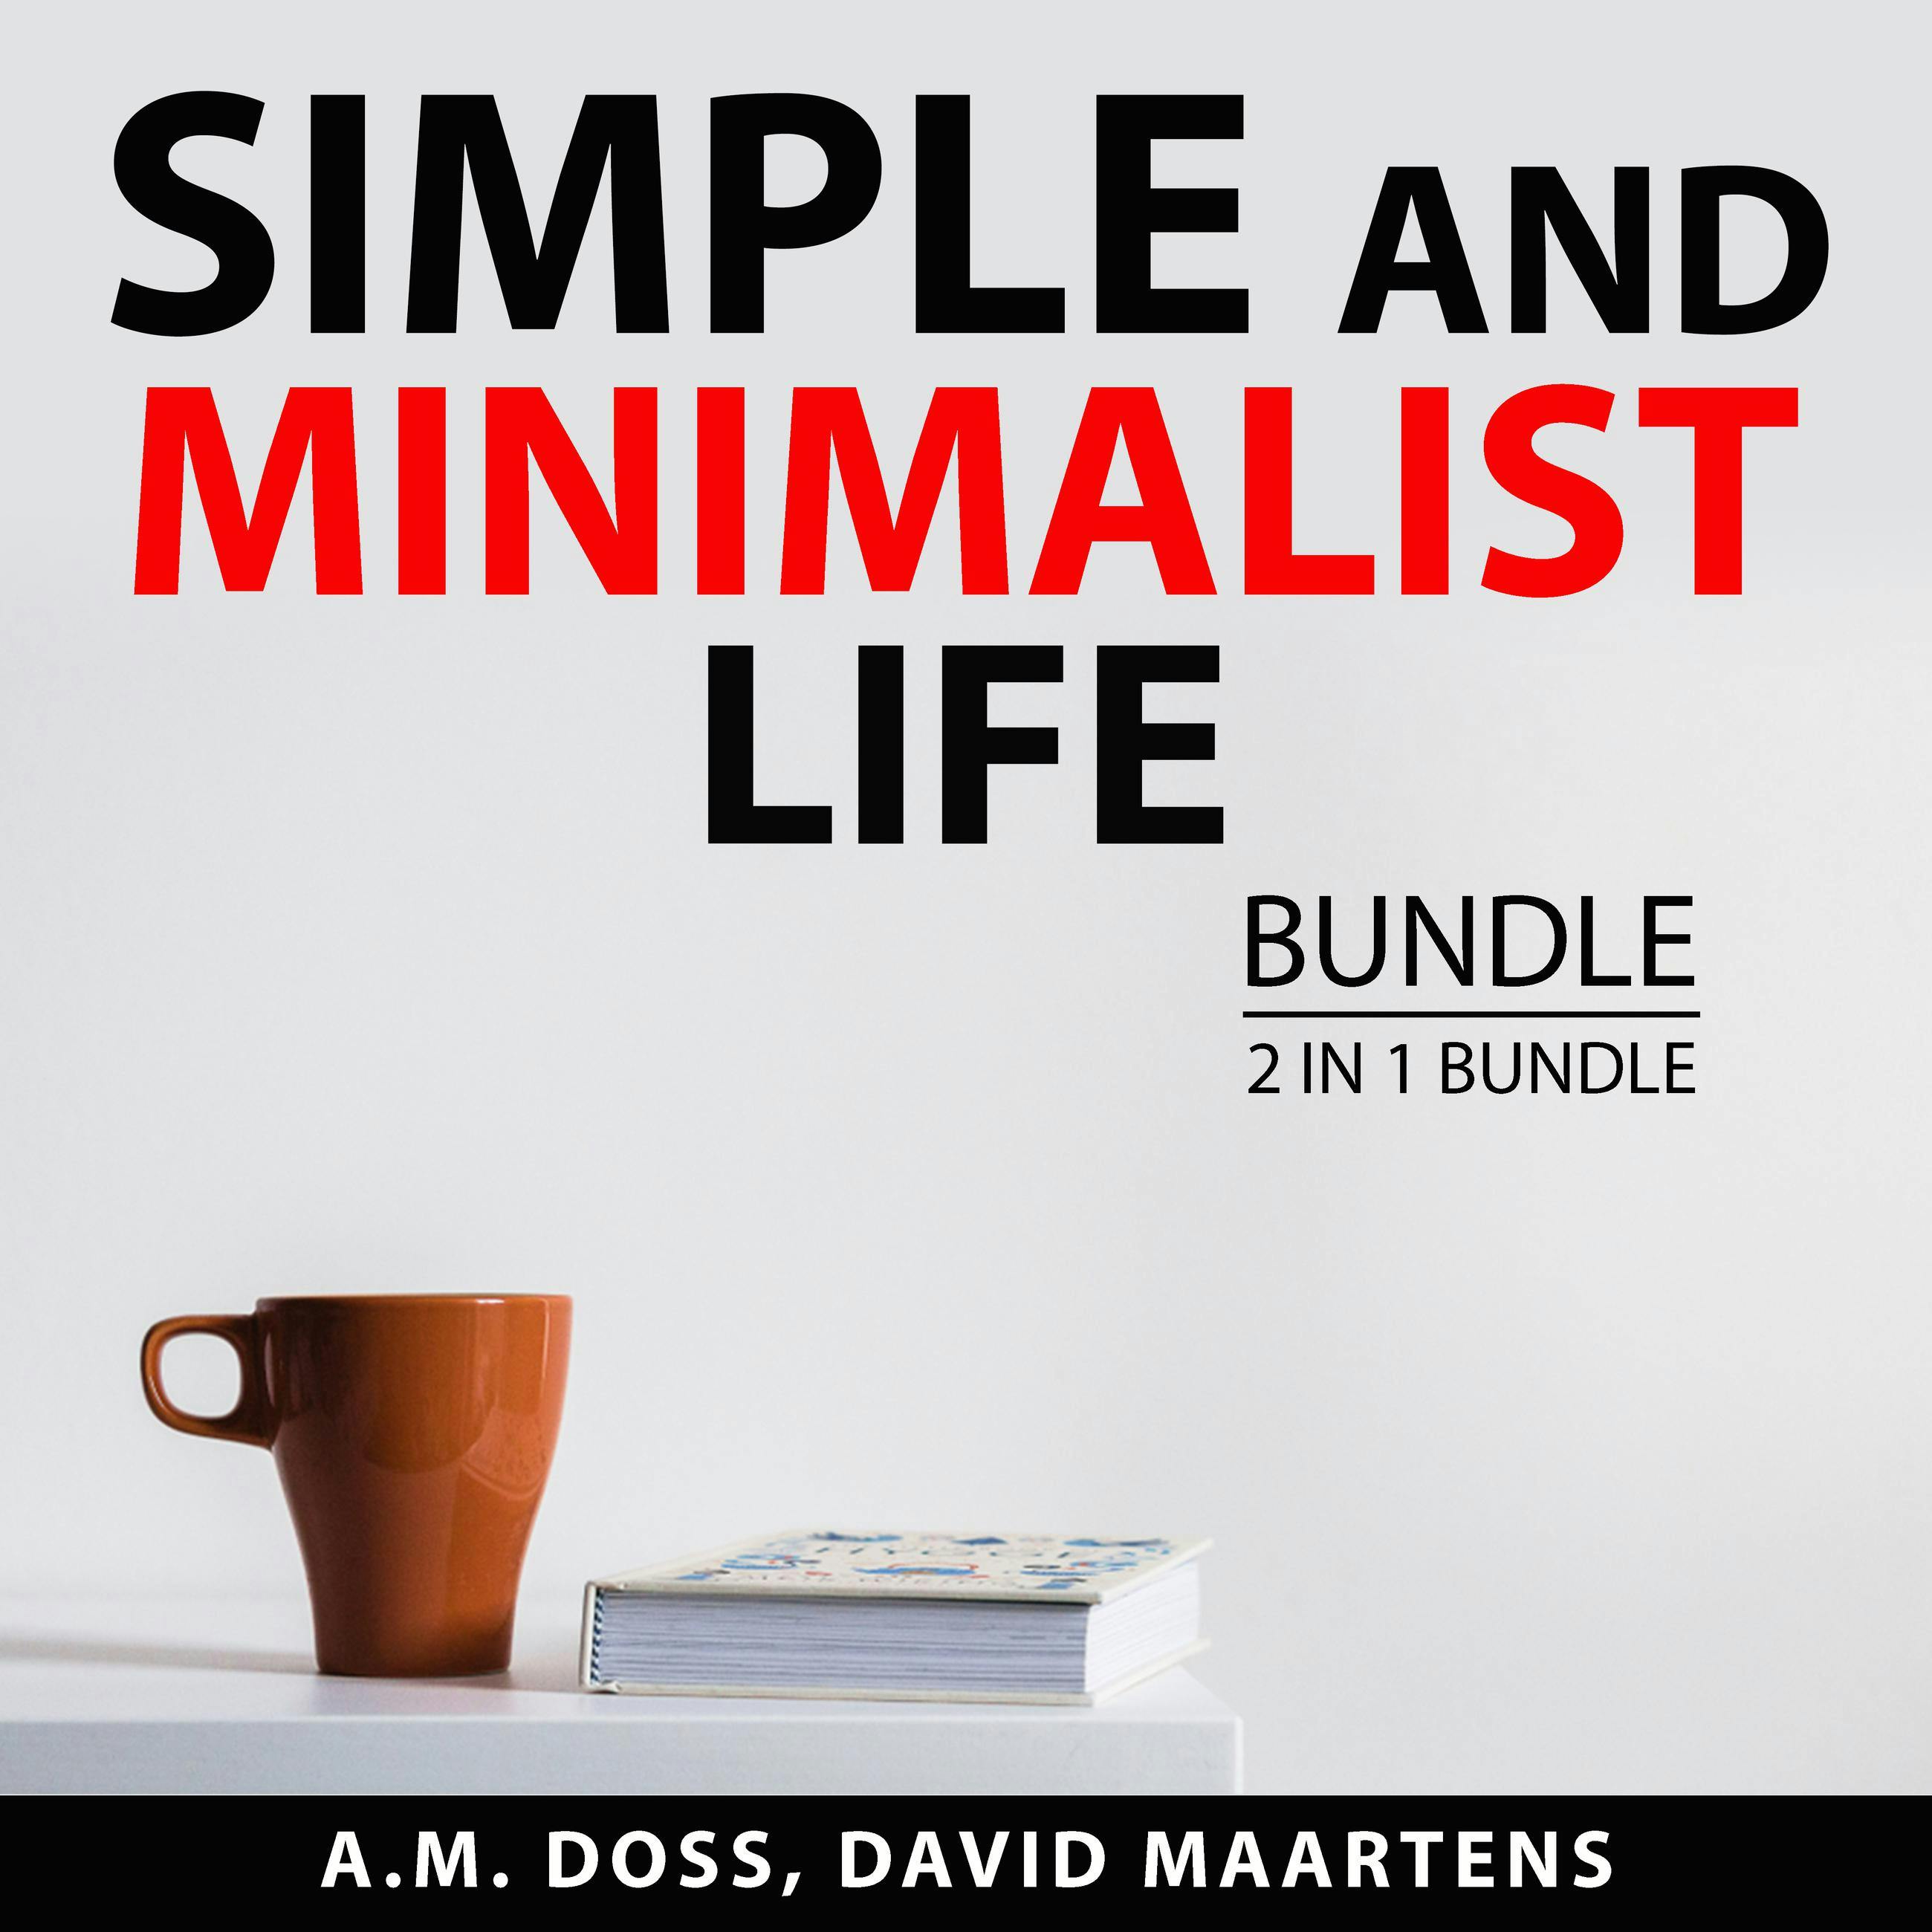 Simple and Minimalist Life Bundle, 2 in 1 Bundle: Living the Simple Life and Art of Minimalism - undefined